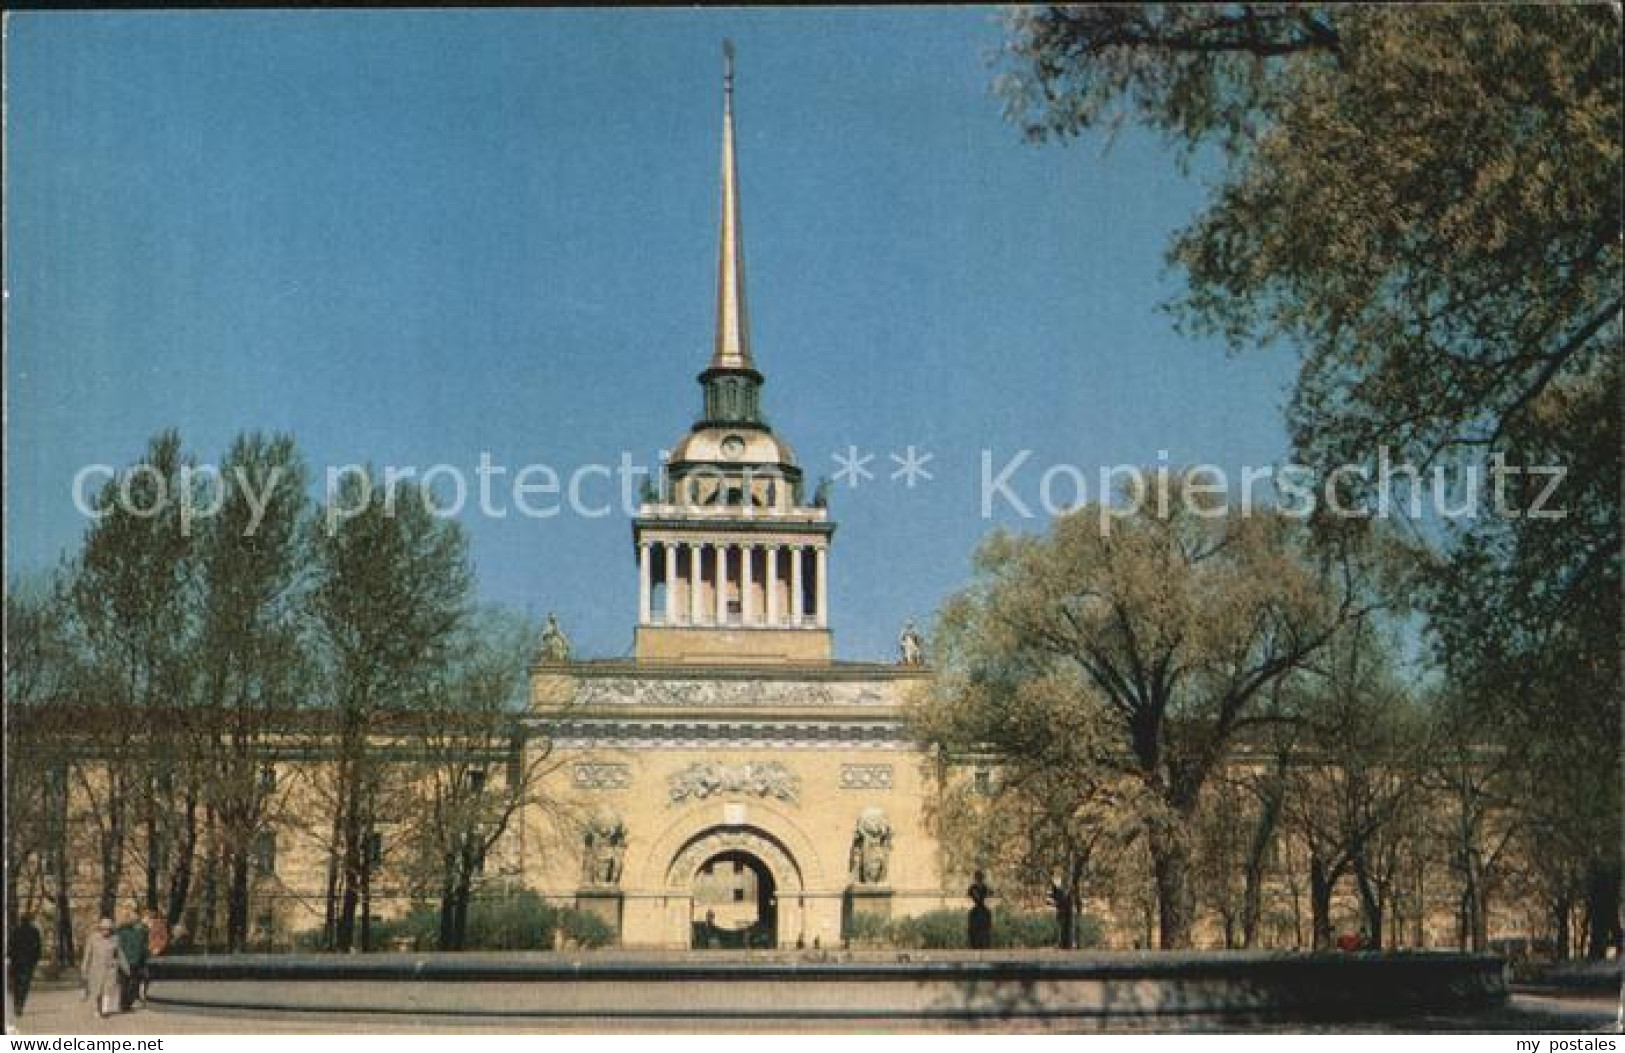 72521898 St Petersburg Leningrad Admiralty   - Russie